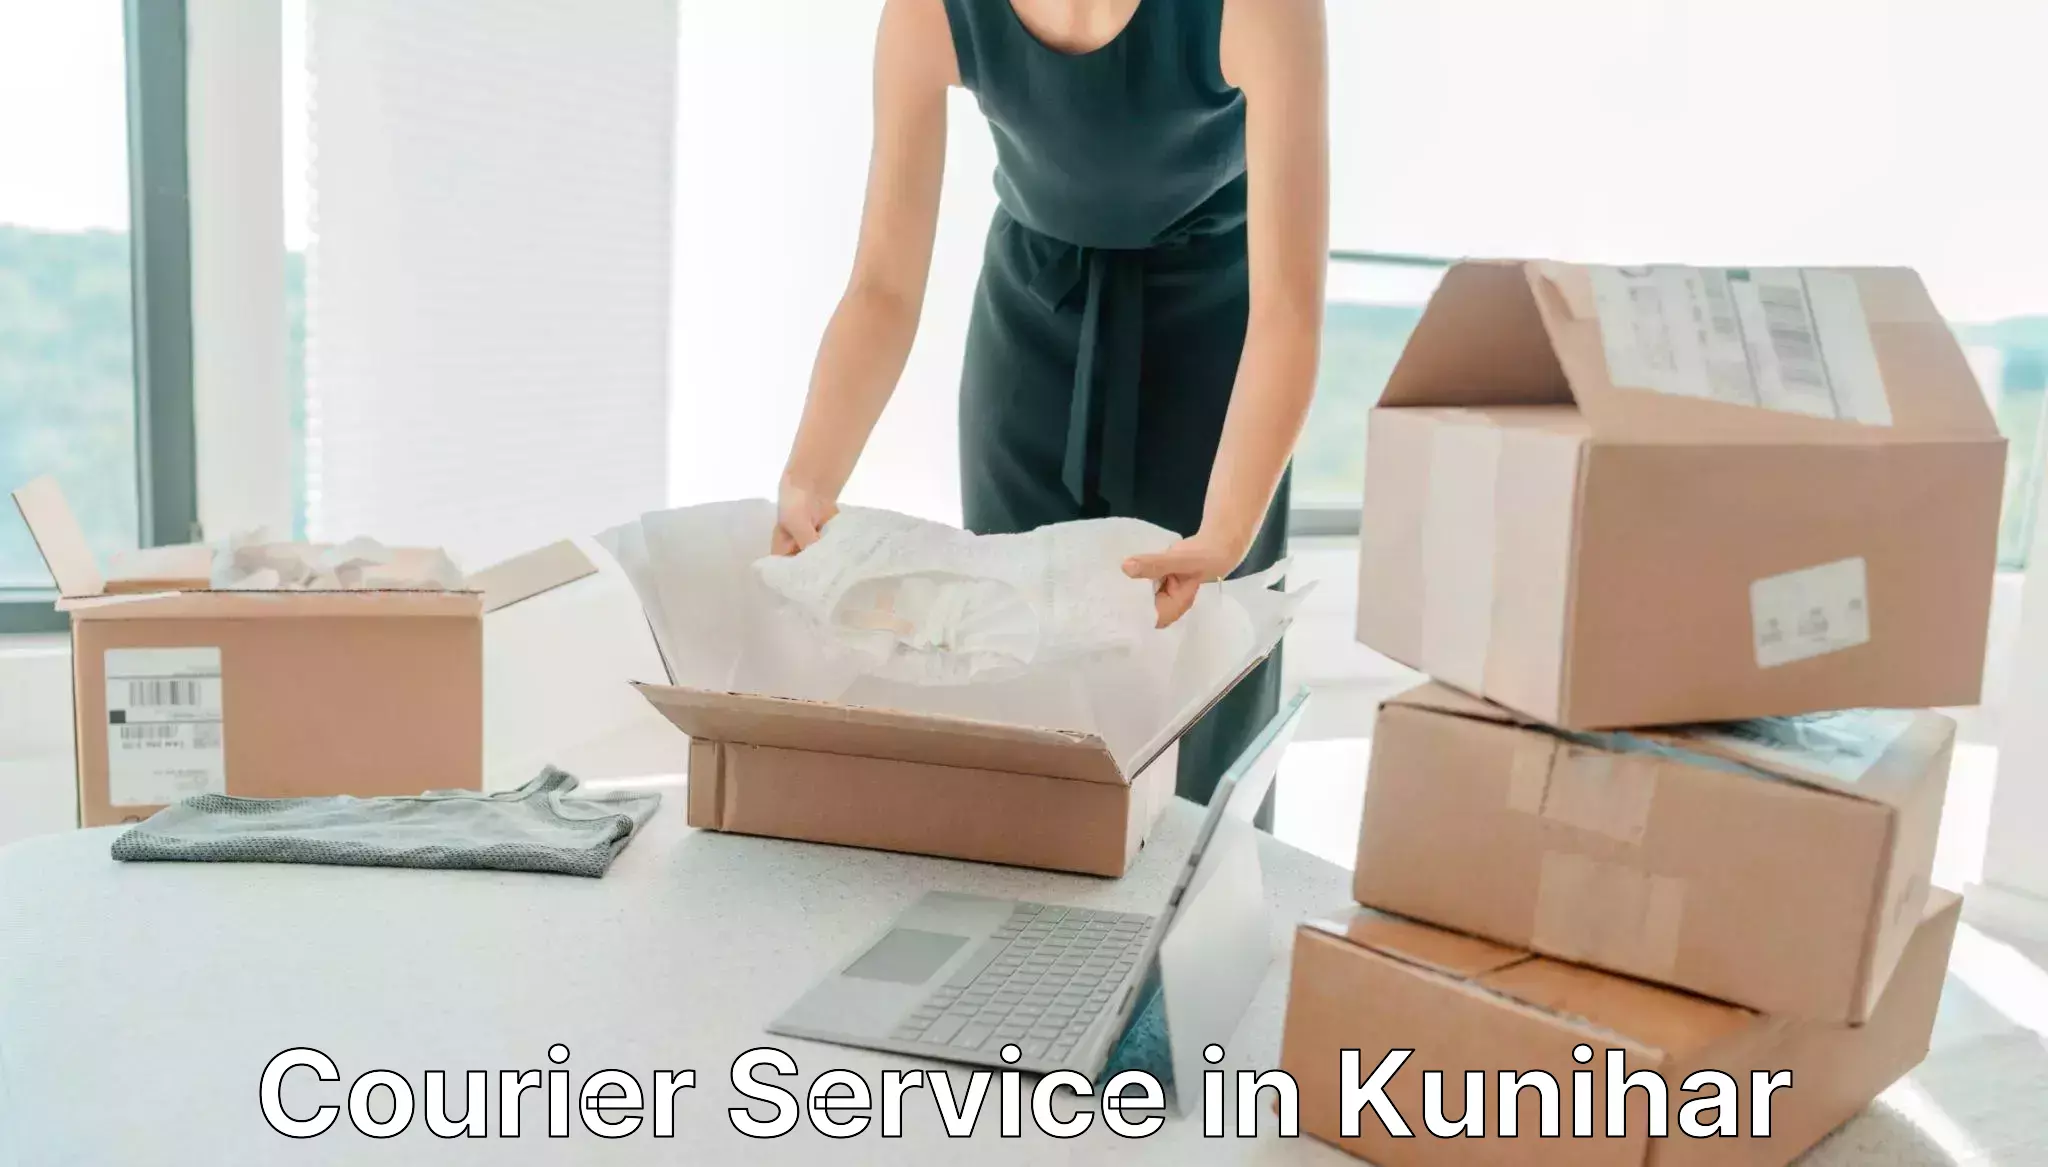 Bulk shipment in Kunihar